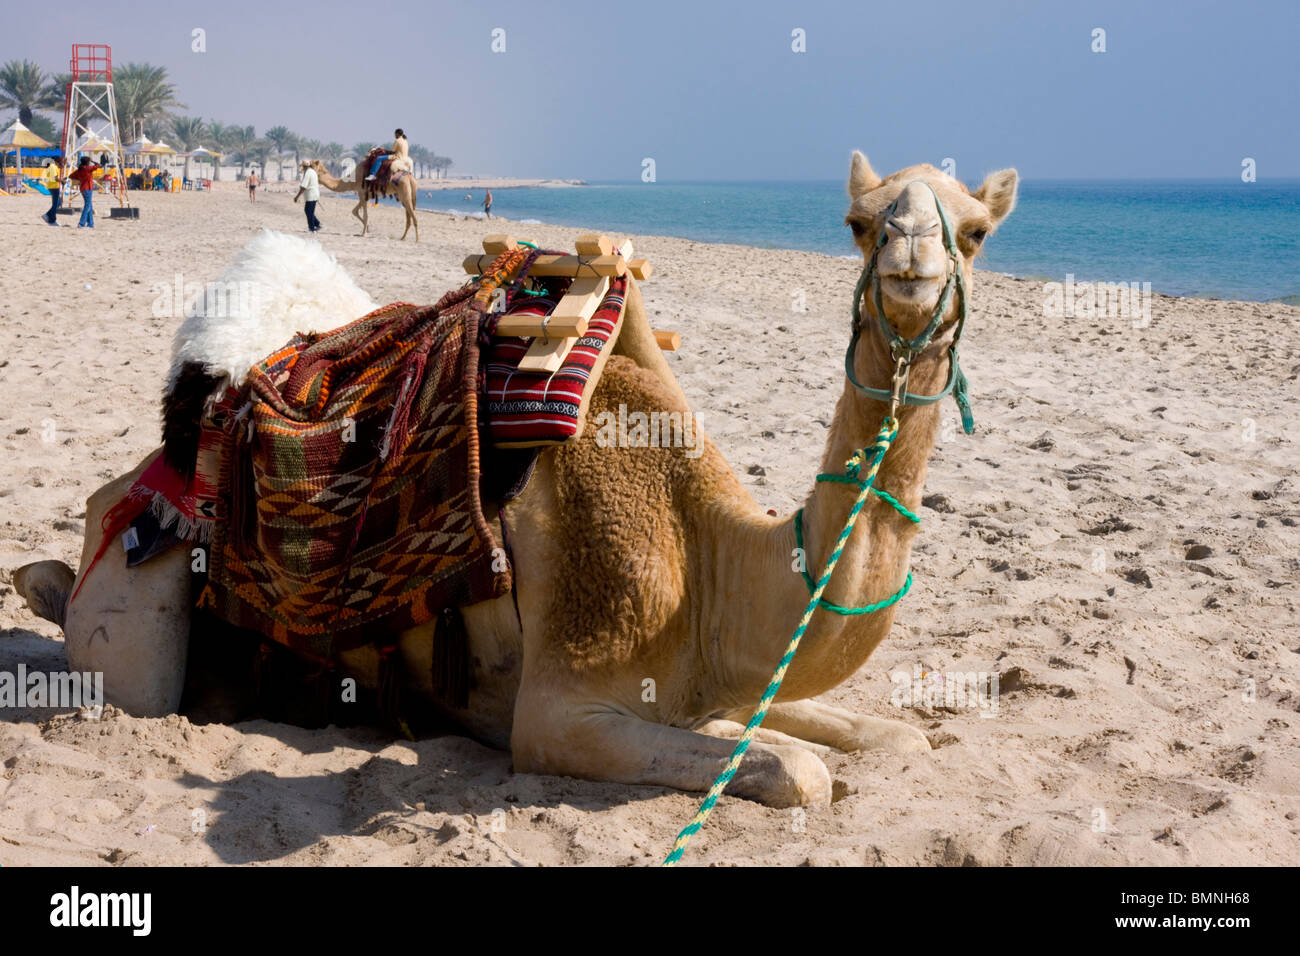 Qatar Sealine Beach Resort Camel Stock Photo 29977984 